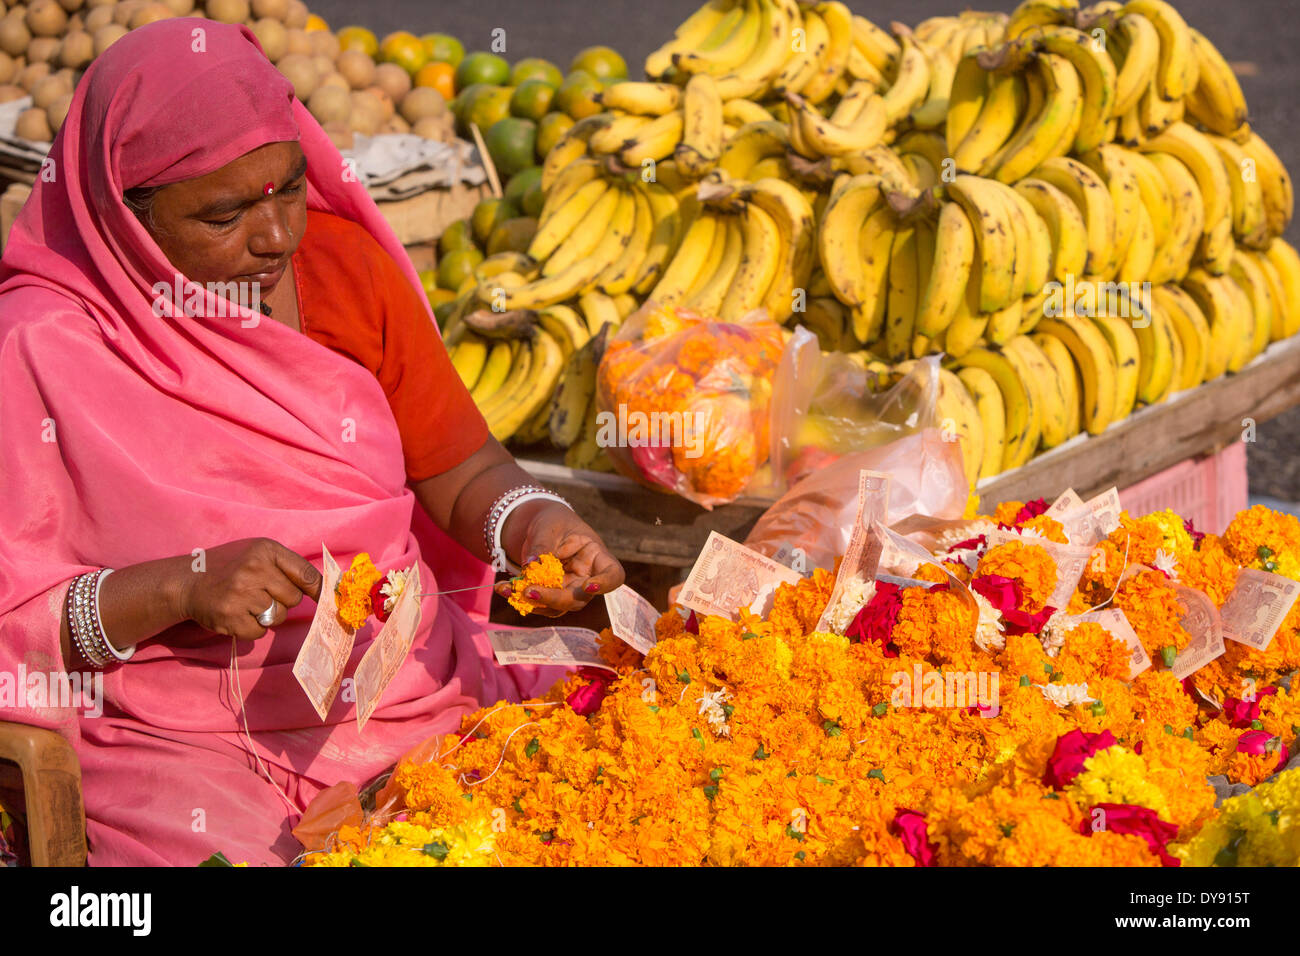 Marché, Vieille Ville, Udaipur, Rajasthan, Inde, Asie, ville, ville, femme, traditionnelle, fruits, bananes, Banque D'Images